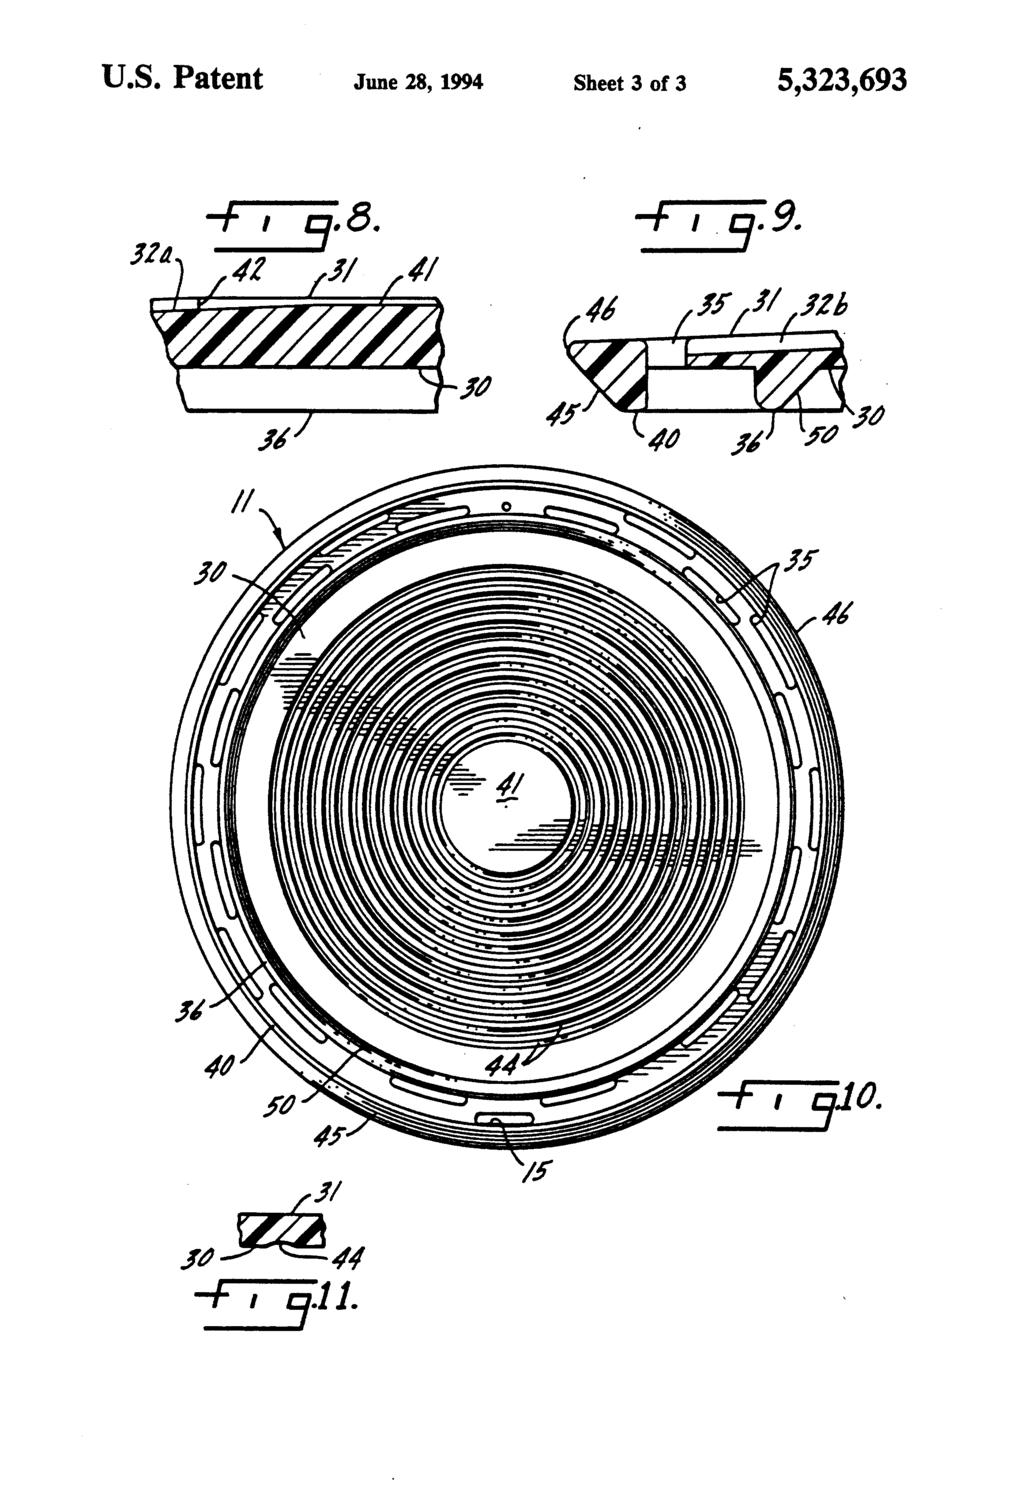 U.S. Patent June 28, 1994 Sheet 3 of 3